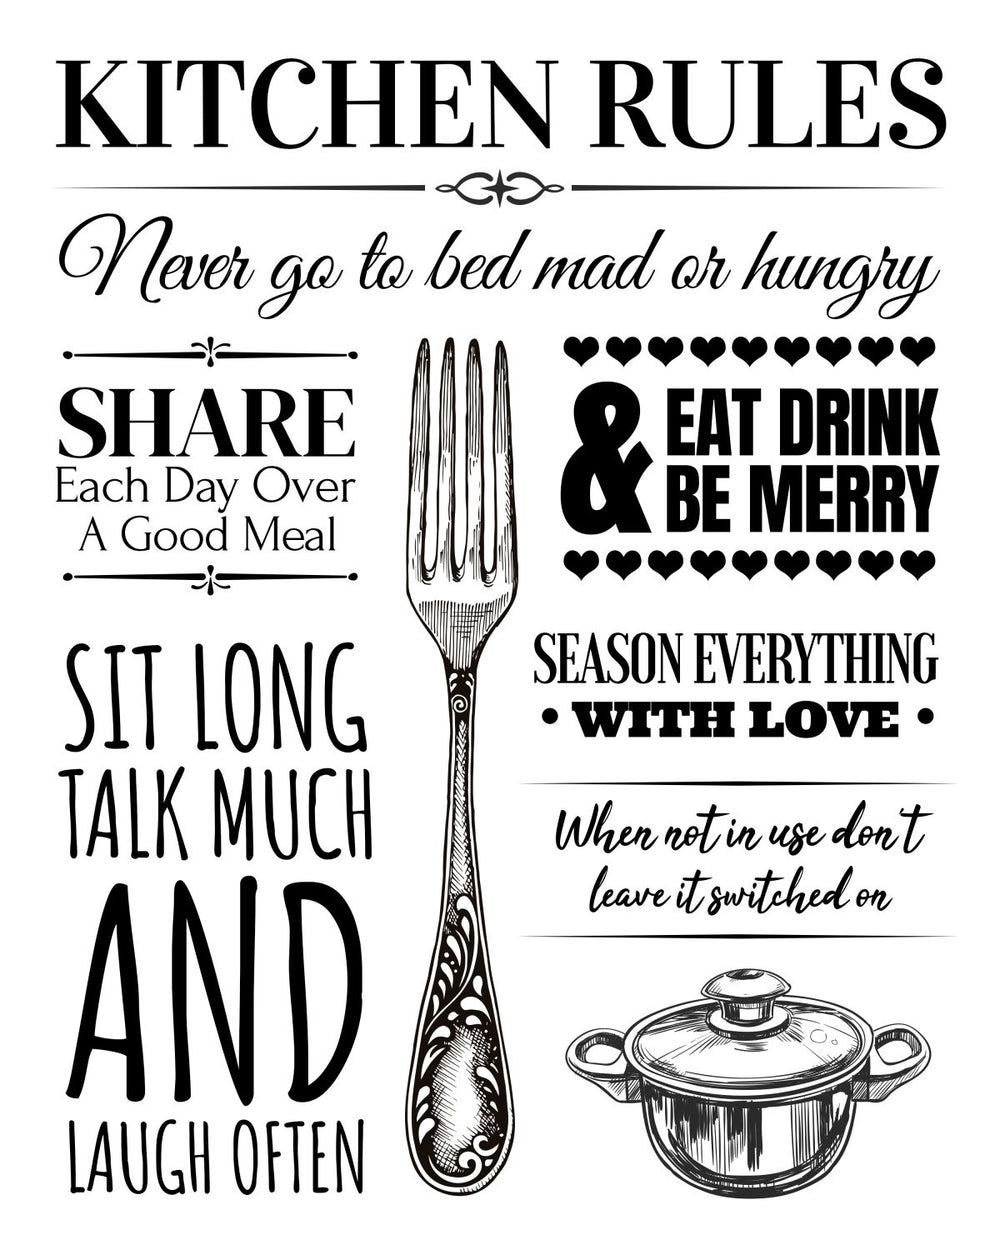 Happy Kitchen Rules